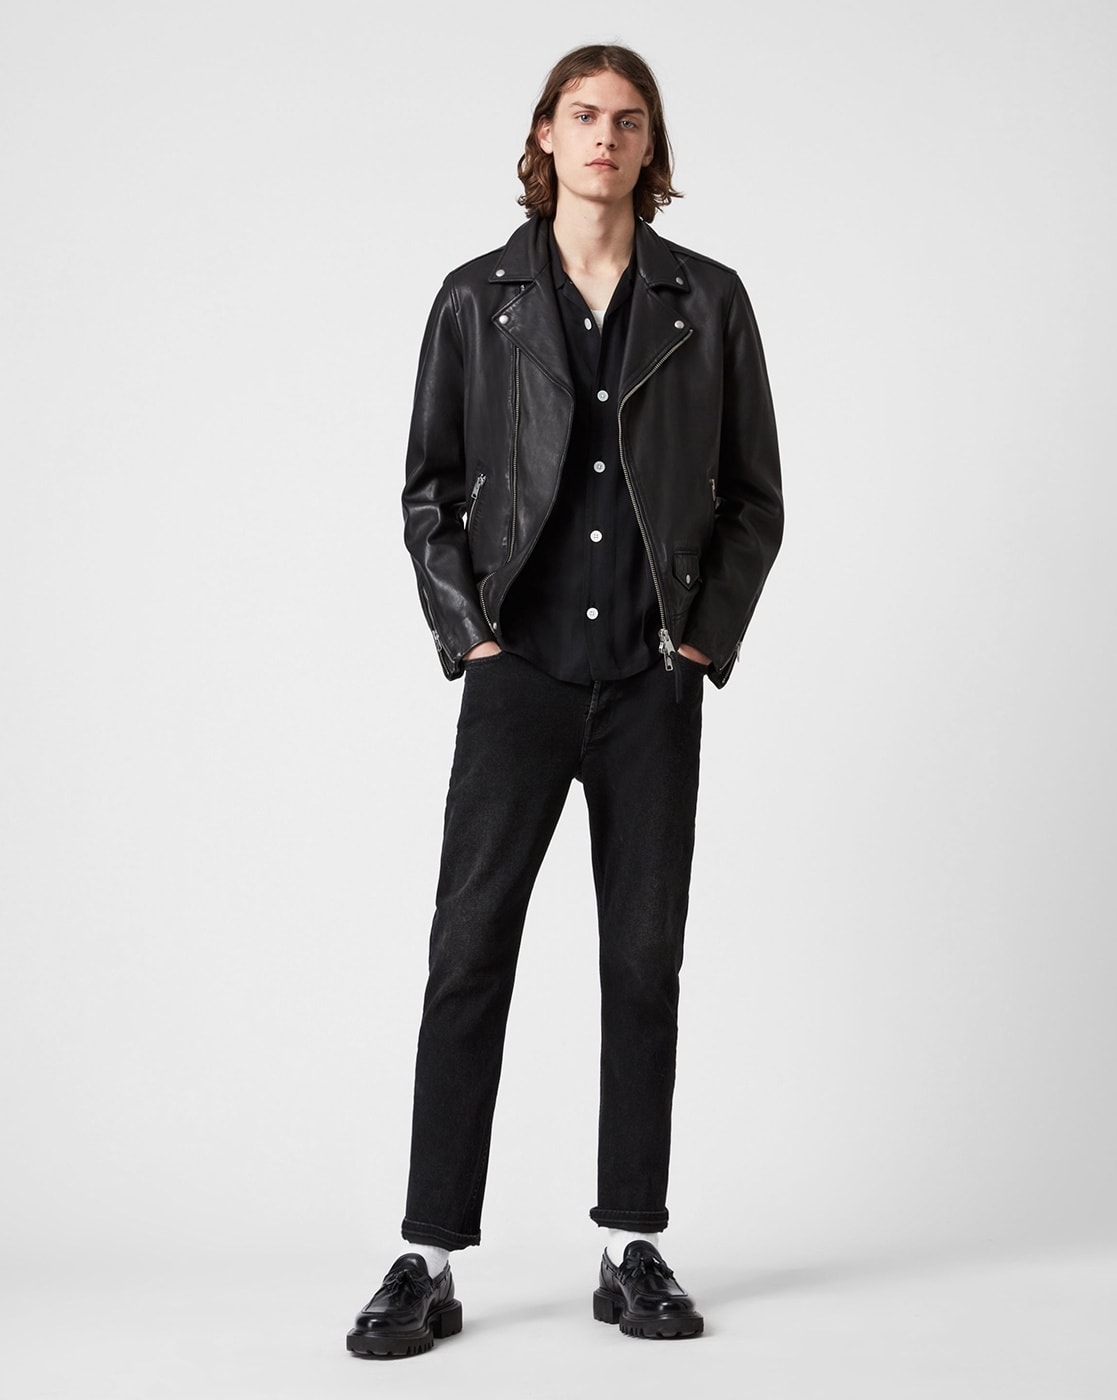 AllSaints Leather Jacket Review | Milo Biker (Best Leather Jacket Series)